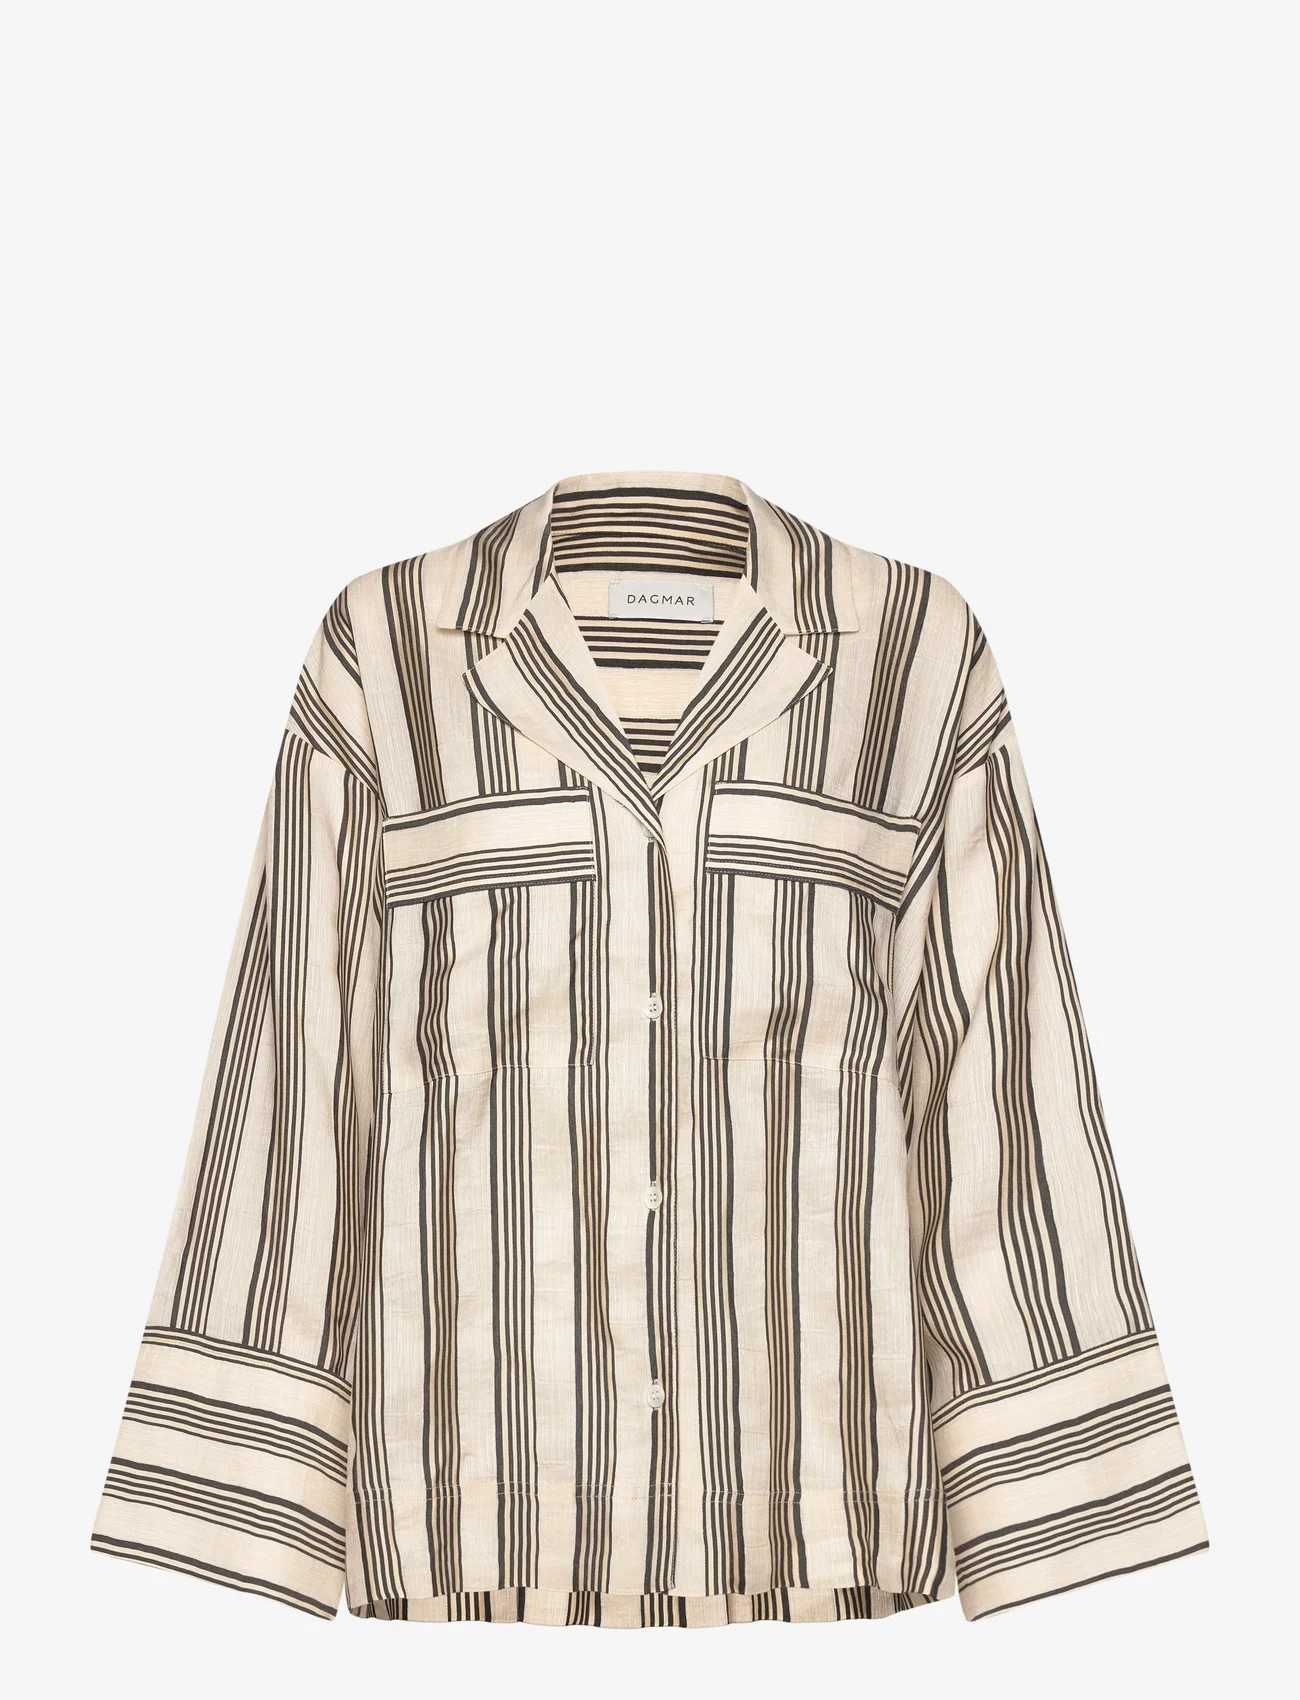 House Of Dagmar - Striped pyjama shirt - Överdelar - ivory/black - 0